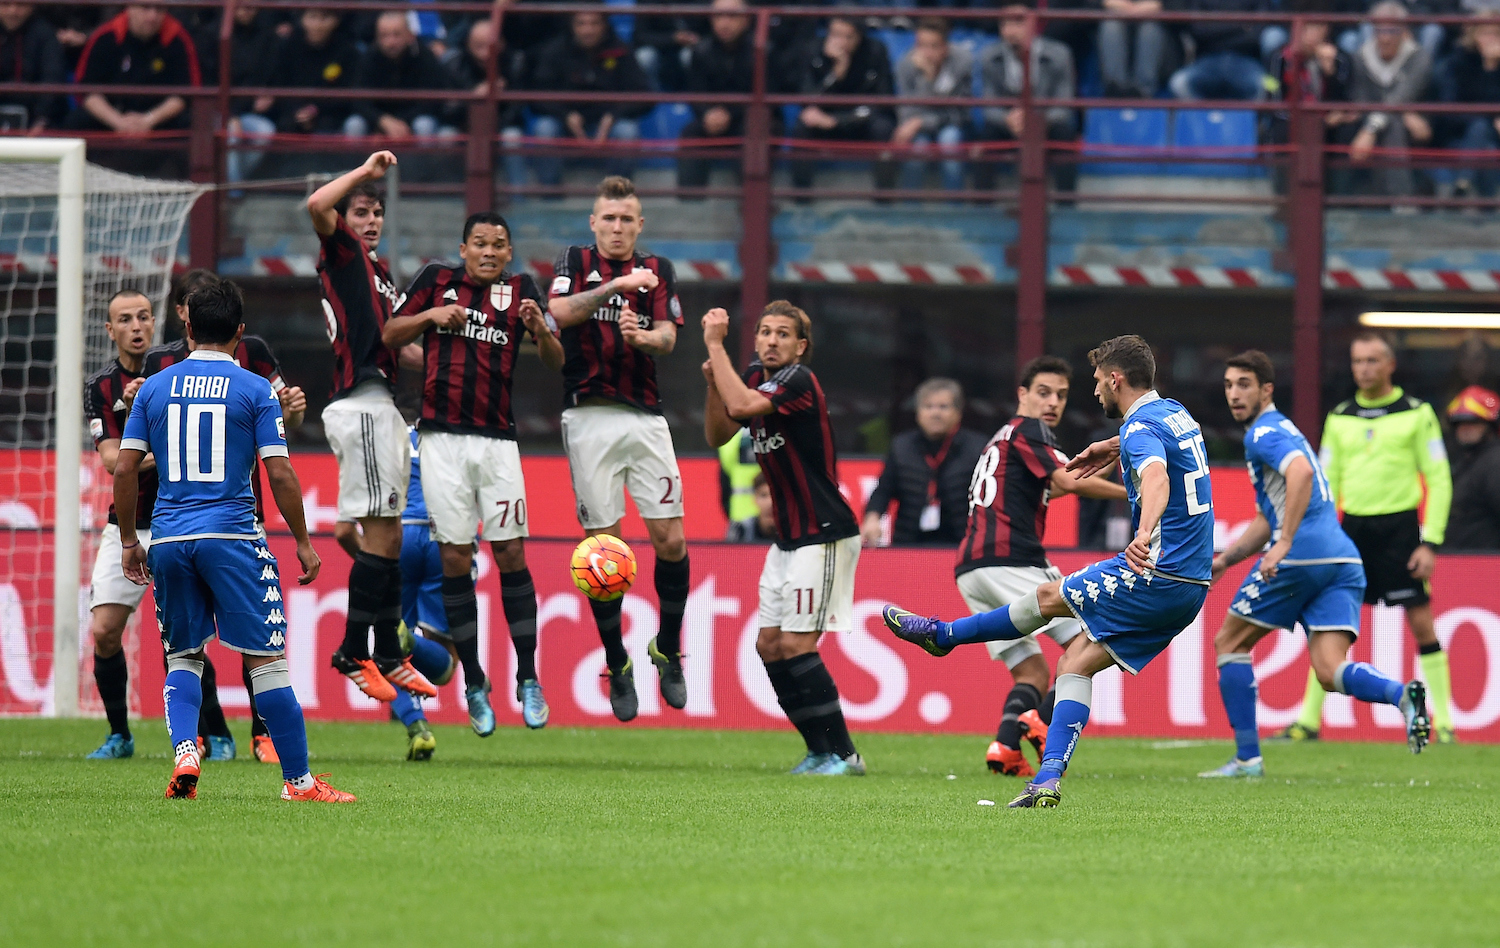 Berardi slots home the free kick against Milan earlier in the season. | Claudio Villa/Getty Images